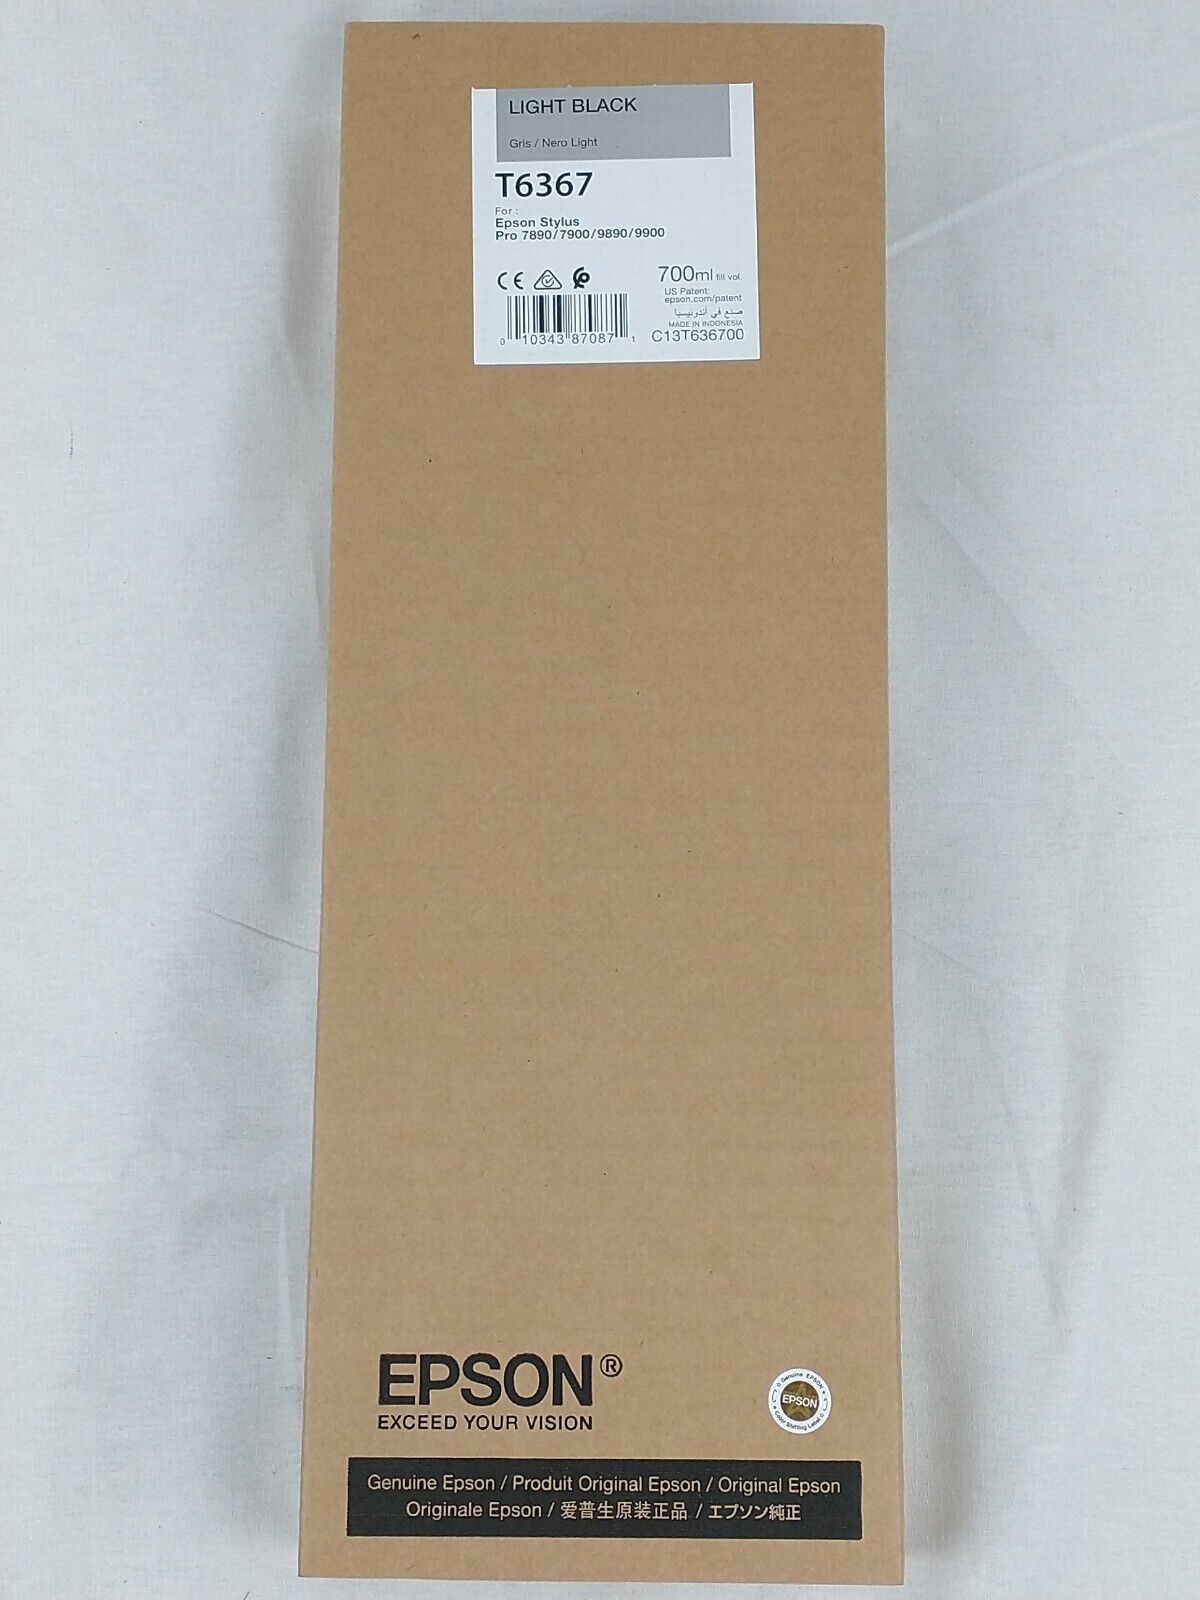 Genuine Epson T6367 Light Black Ink Cartridge Stylus Pro 7900/9900 EXP:12/2022